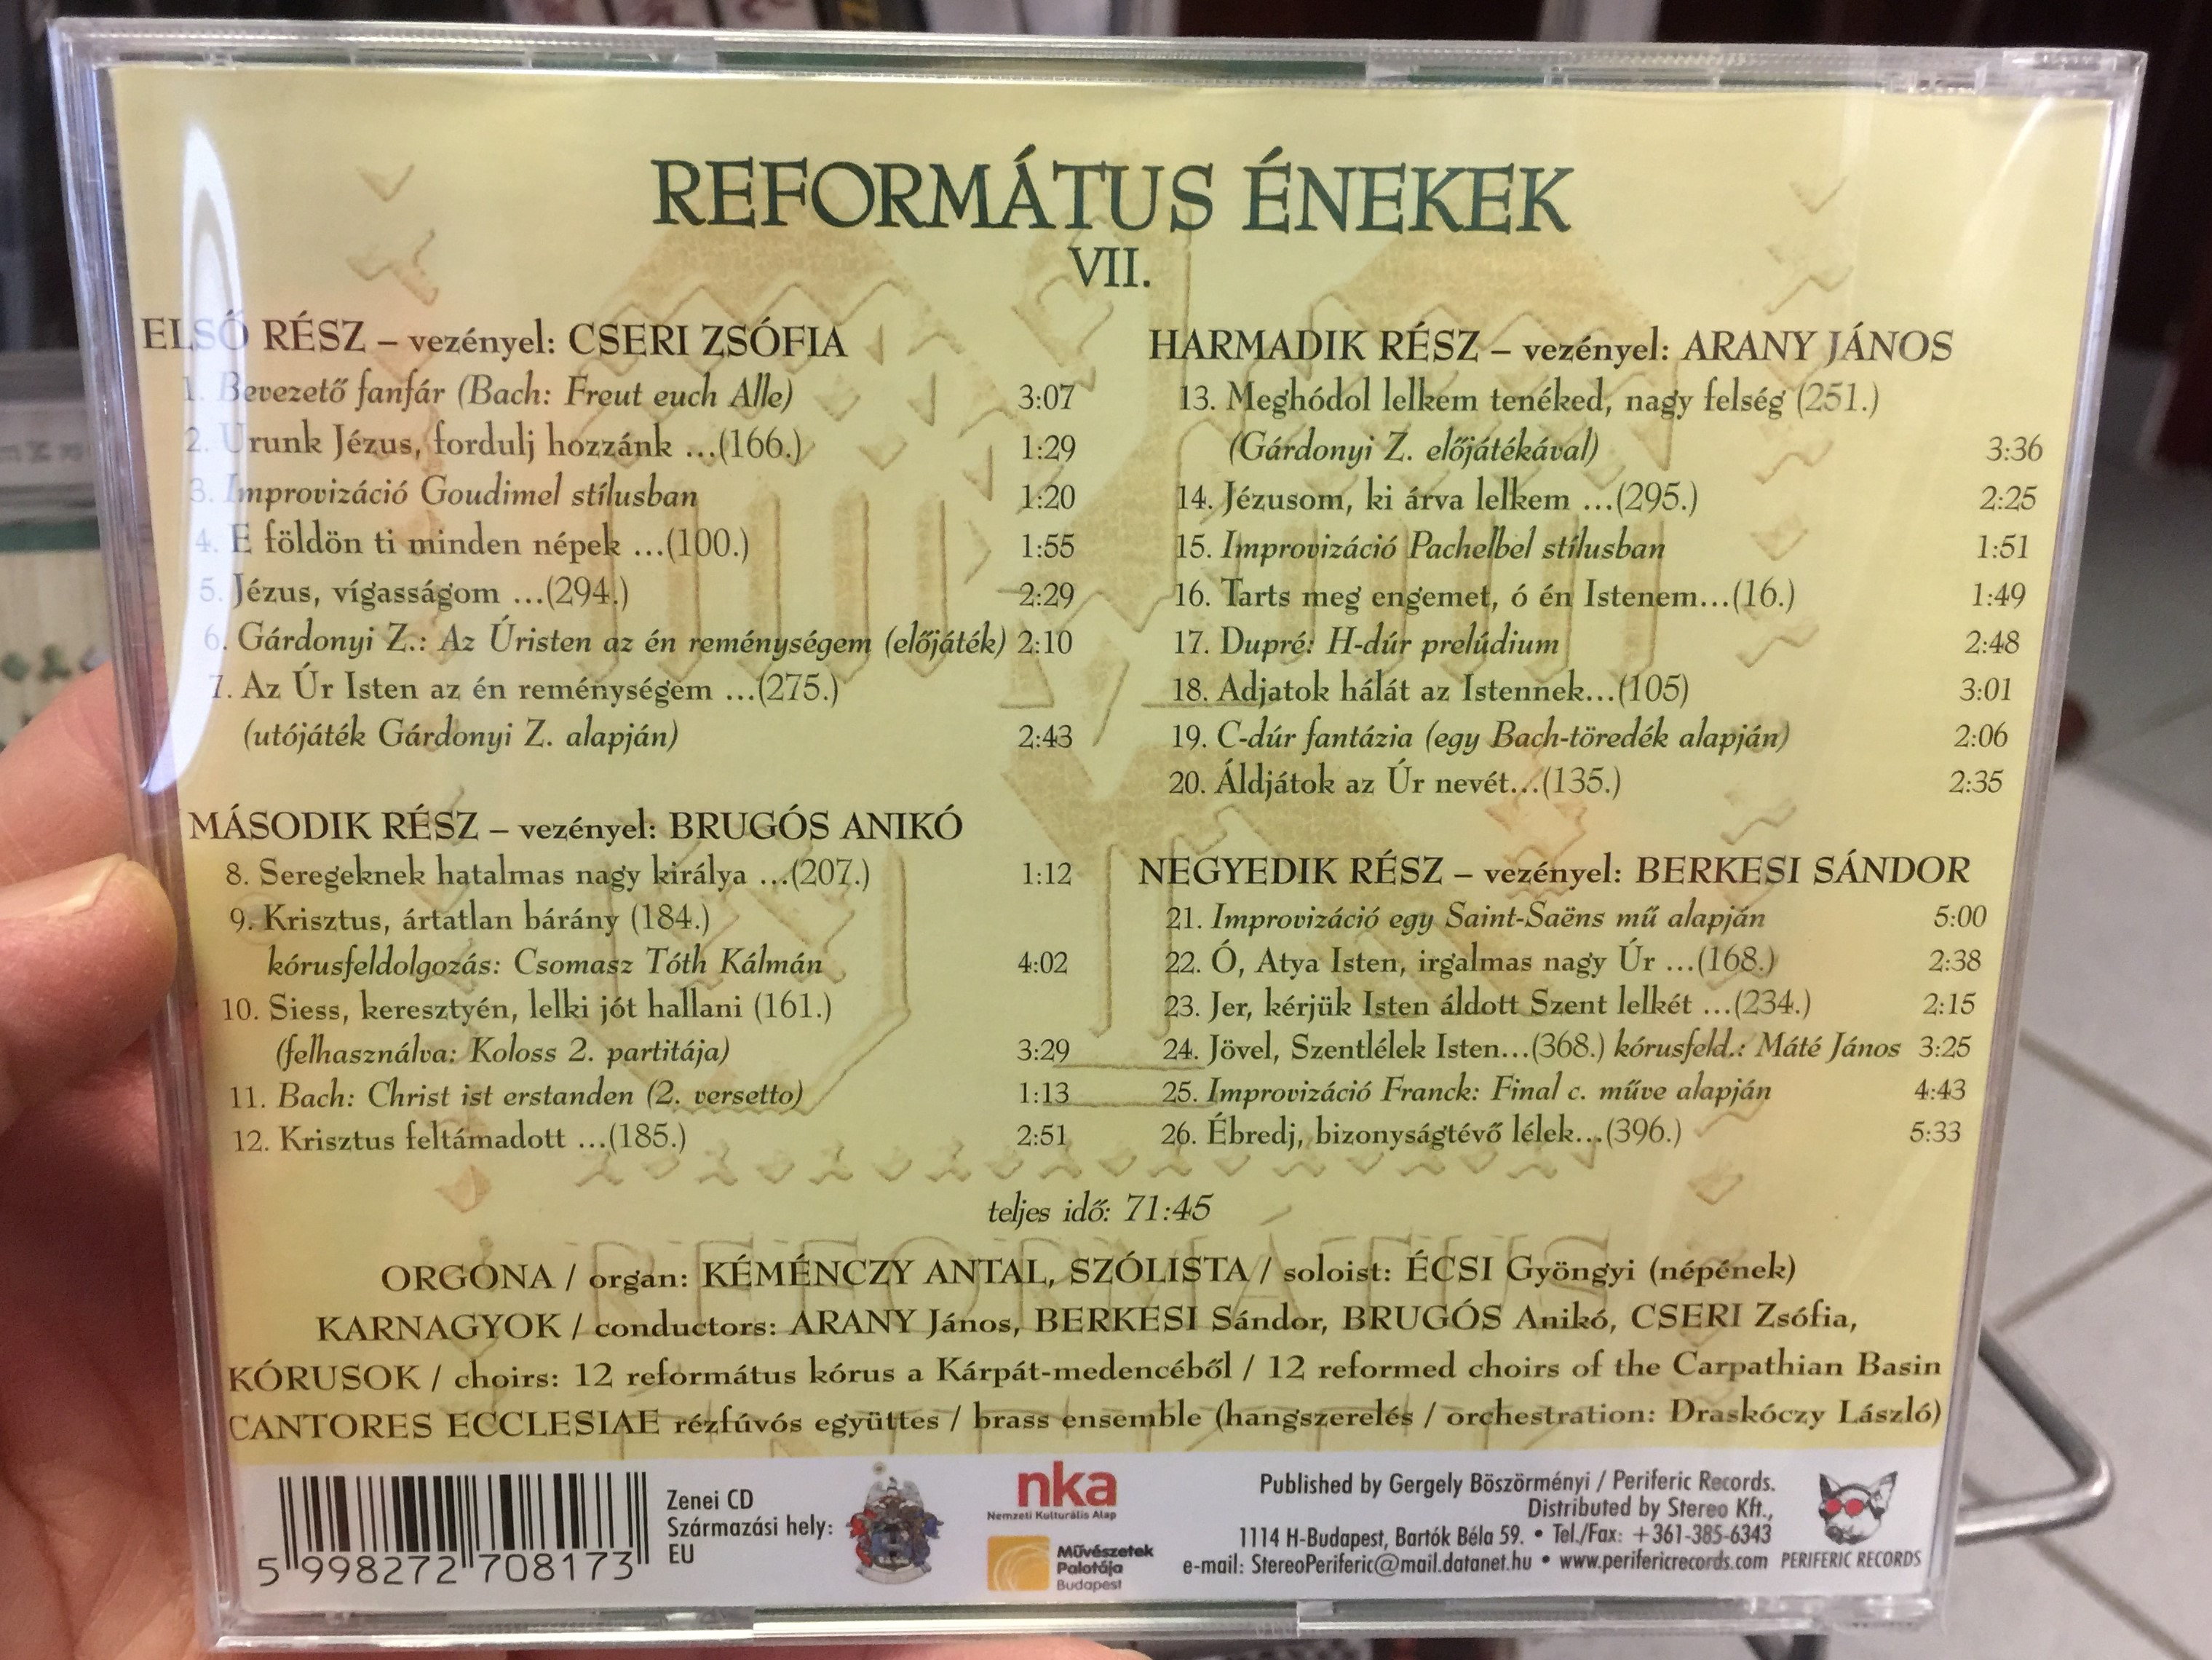 reform-tus-nekek-7.-audio-cd-2008-hymns-of-the-reformed-church-vii.-2.jpg